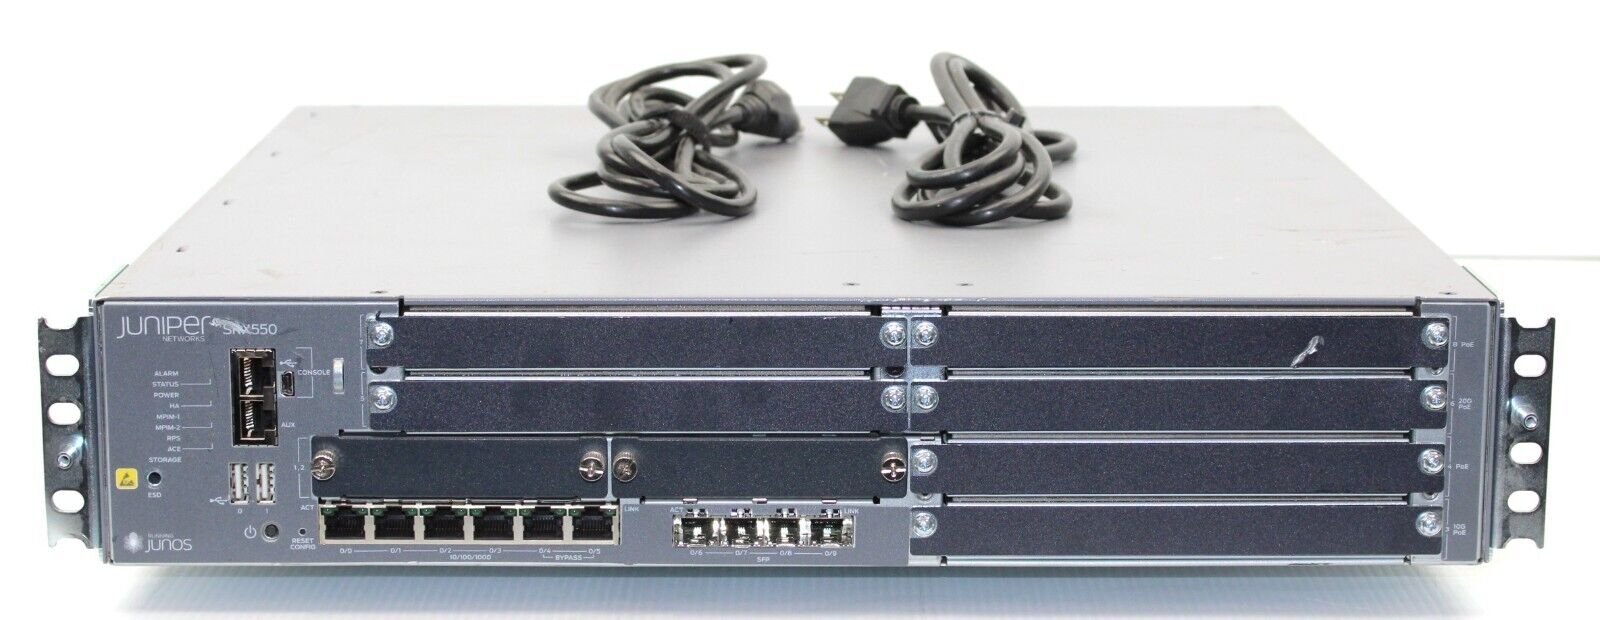 Juniper | SRX550 | SRX550-645AP Services Gateway Firewall - Includes Power Cords